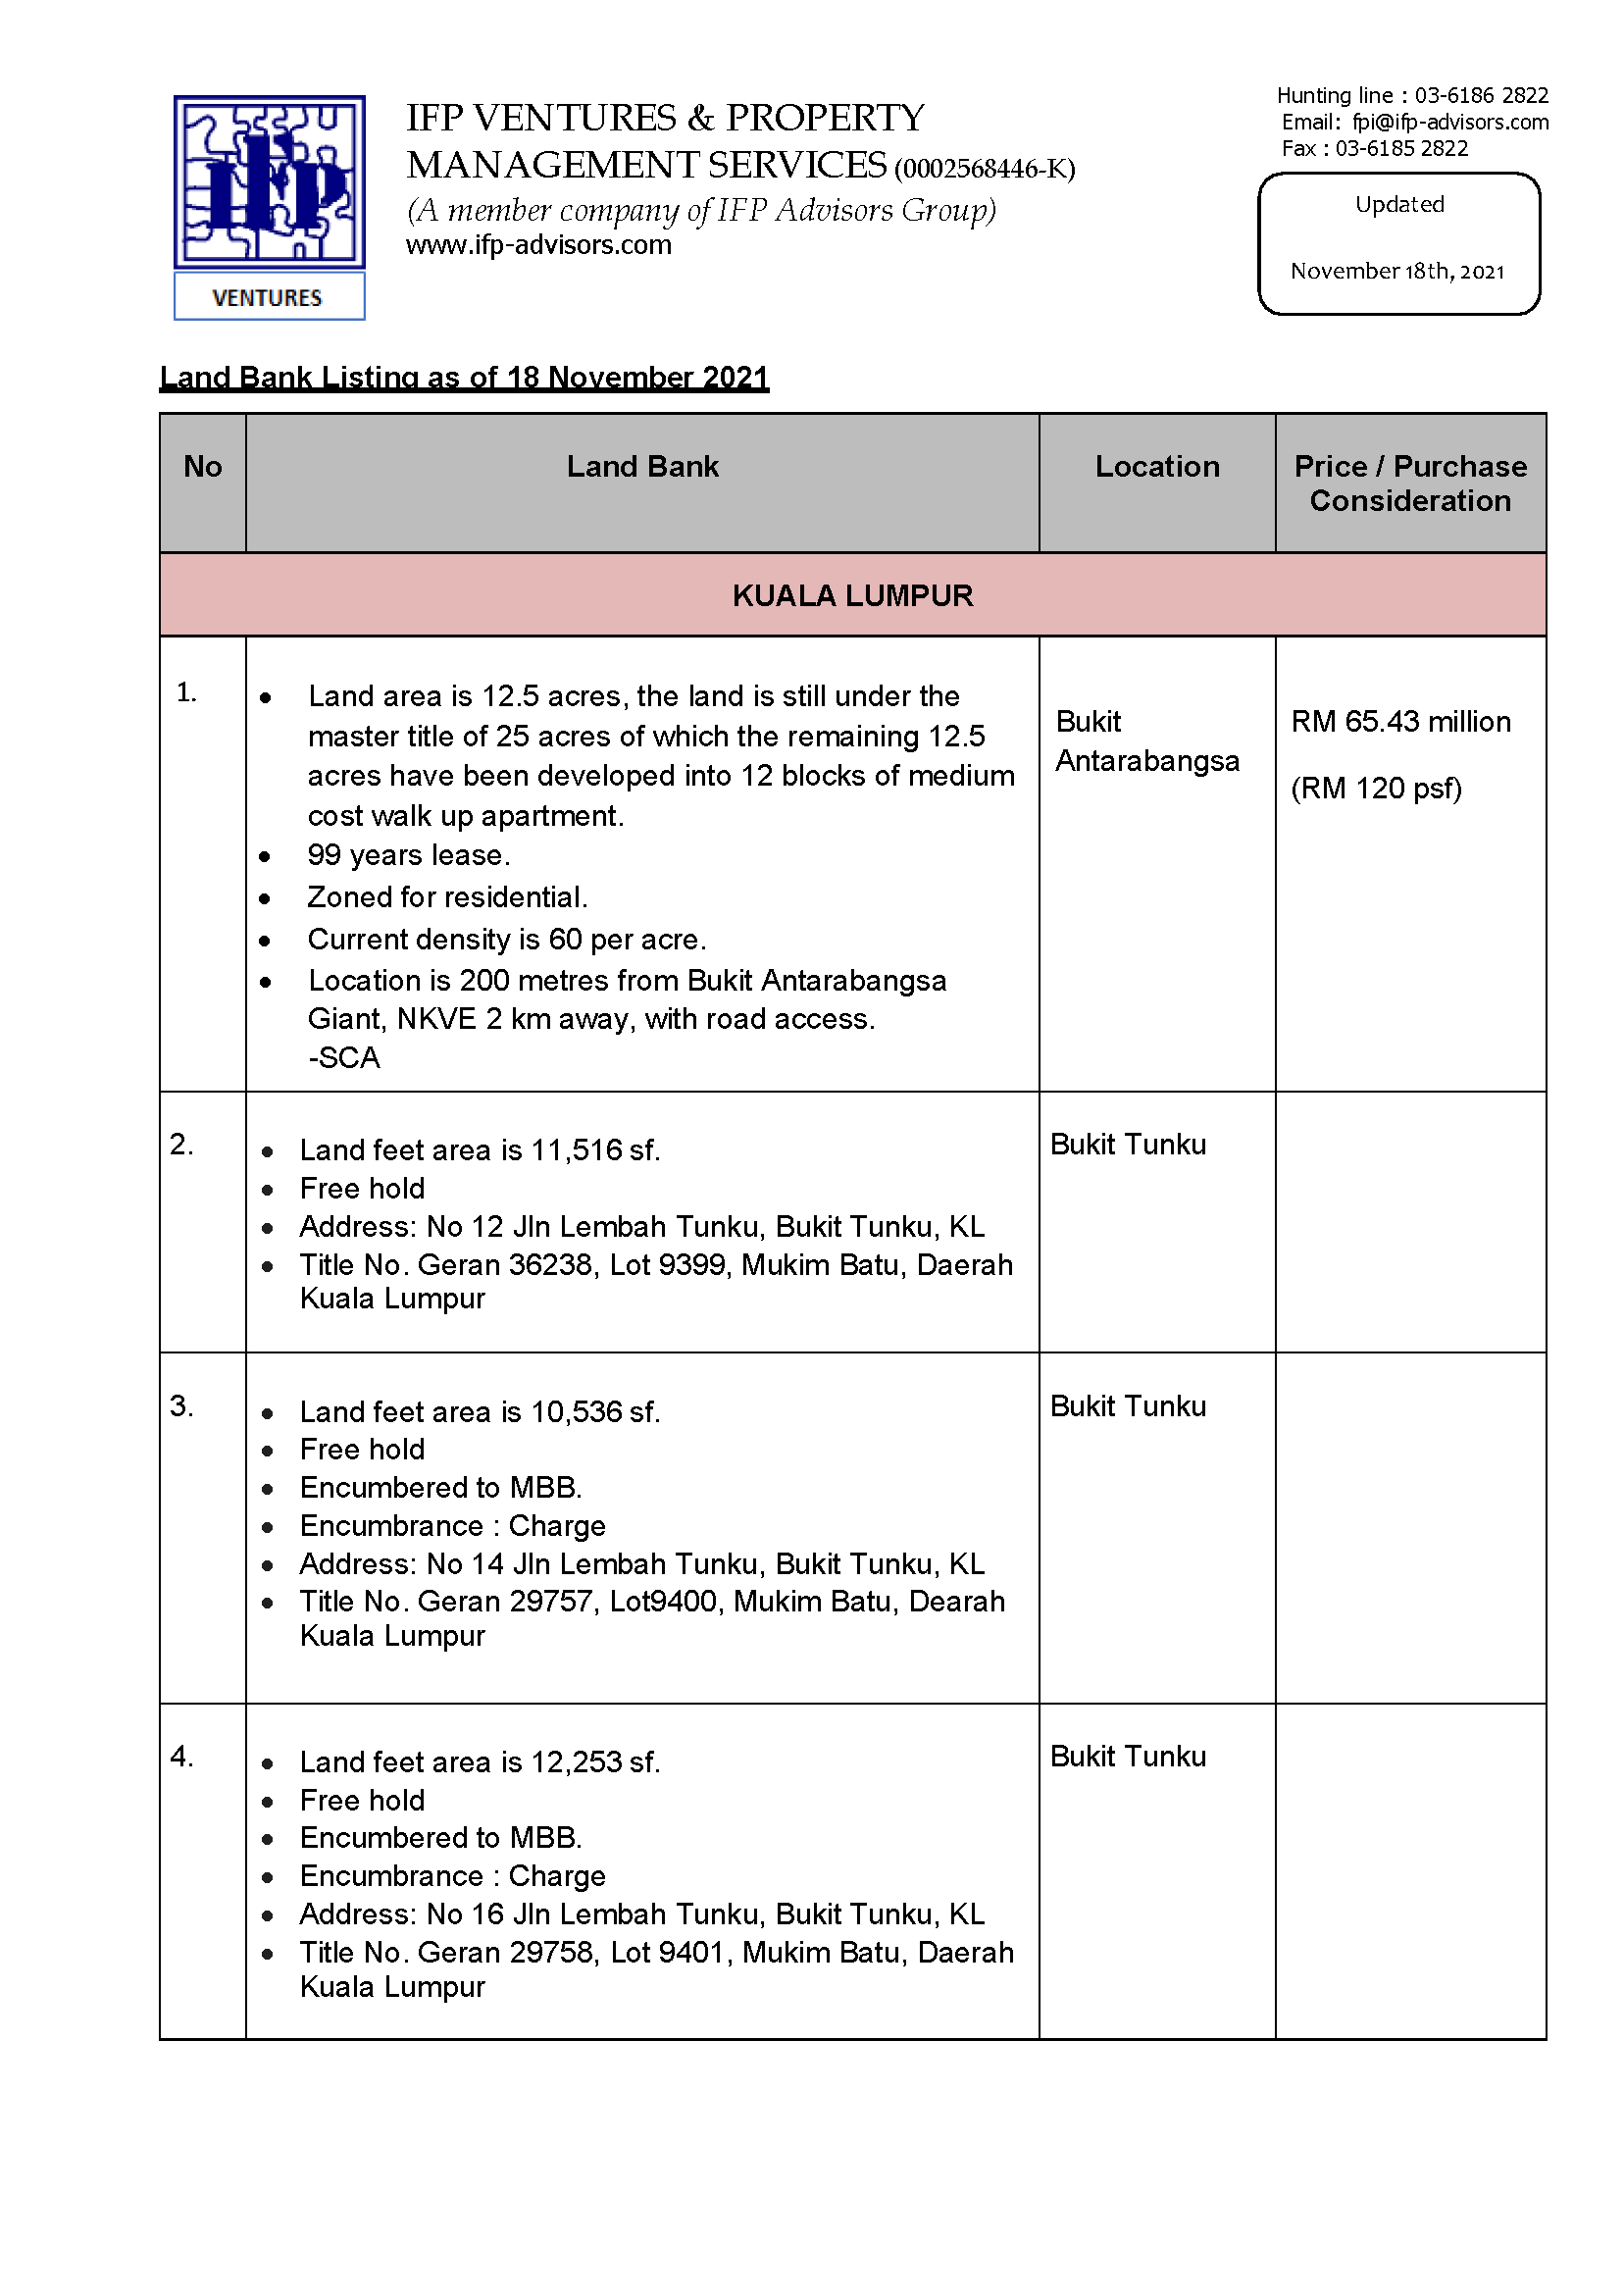 IFPAG Land Bank Listing as of 18 November 2021_Page_01